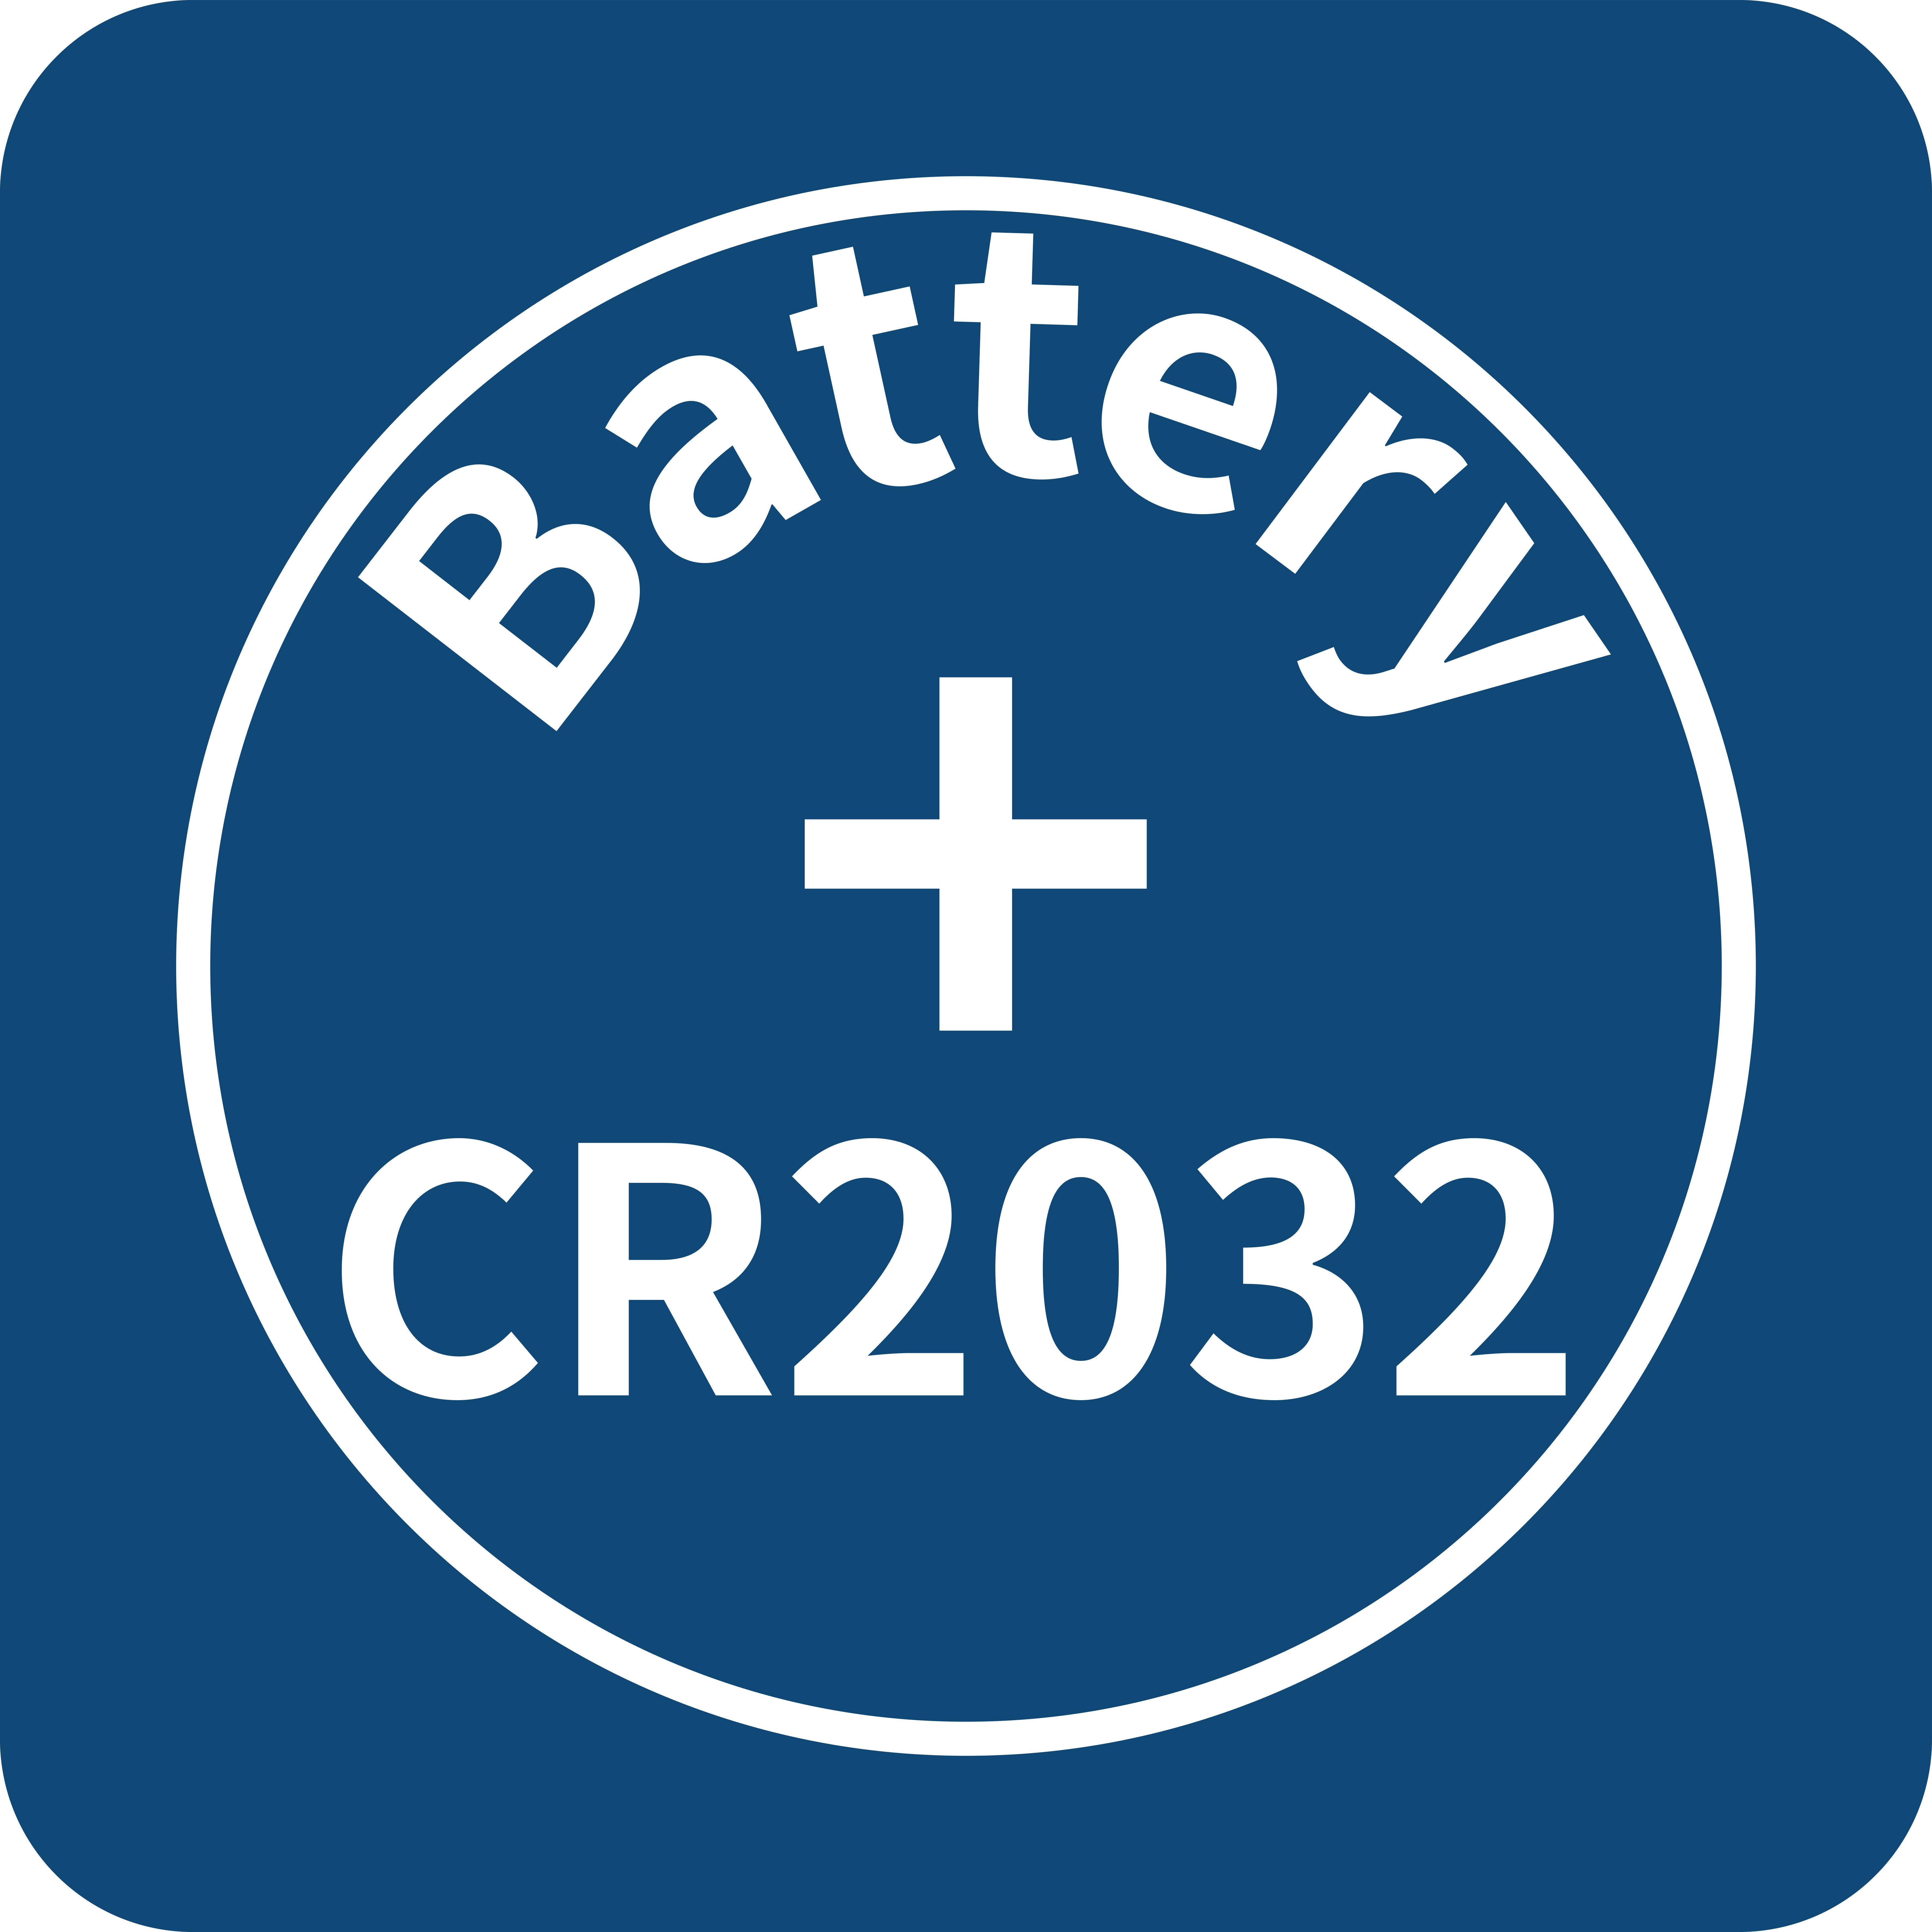 Batteria CR2032